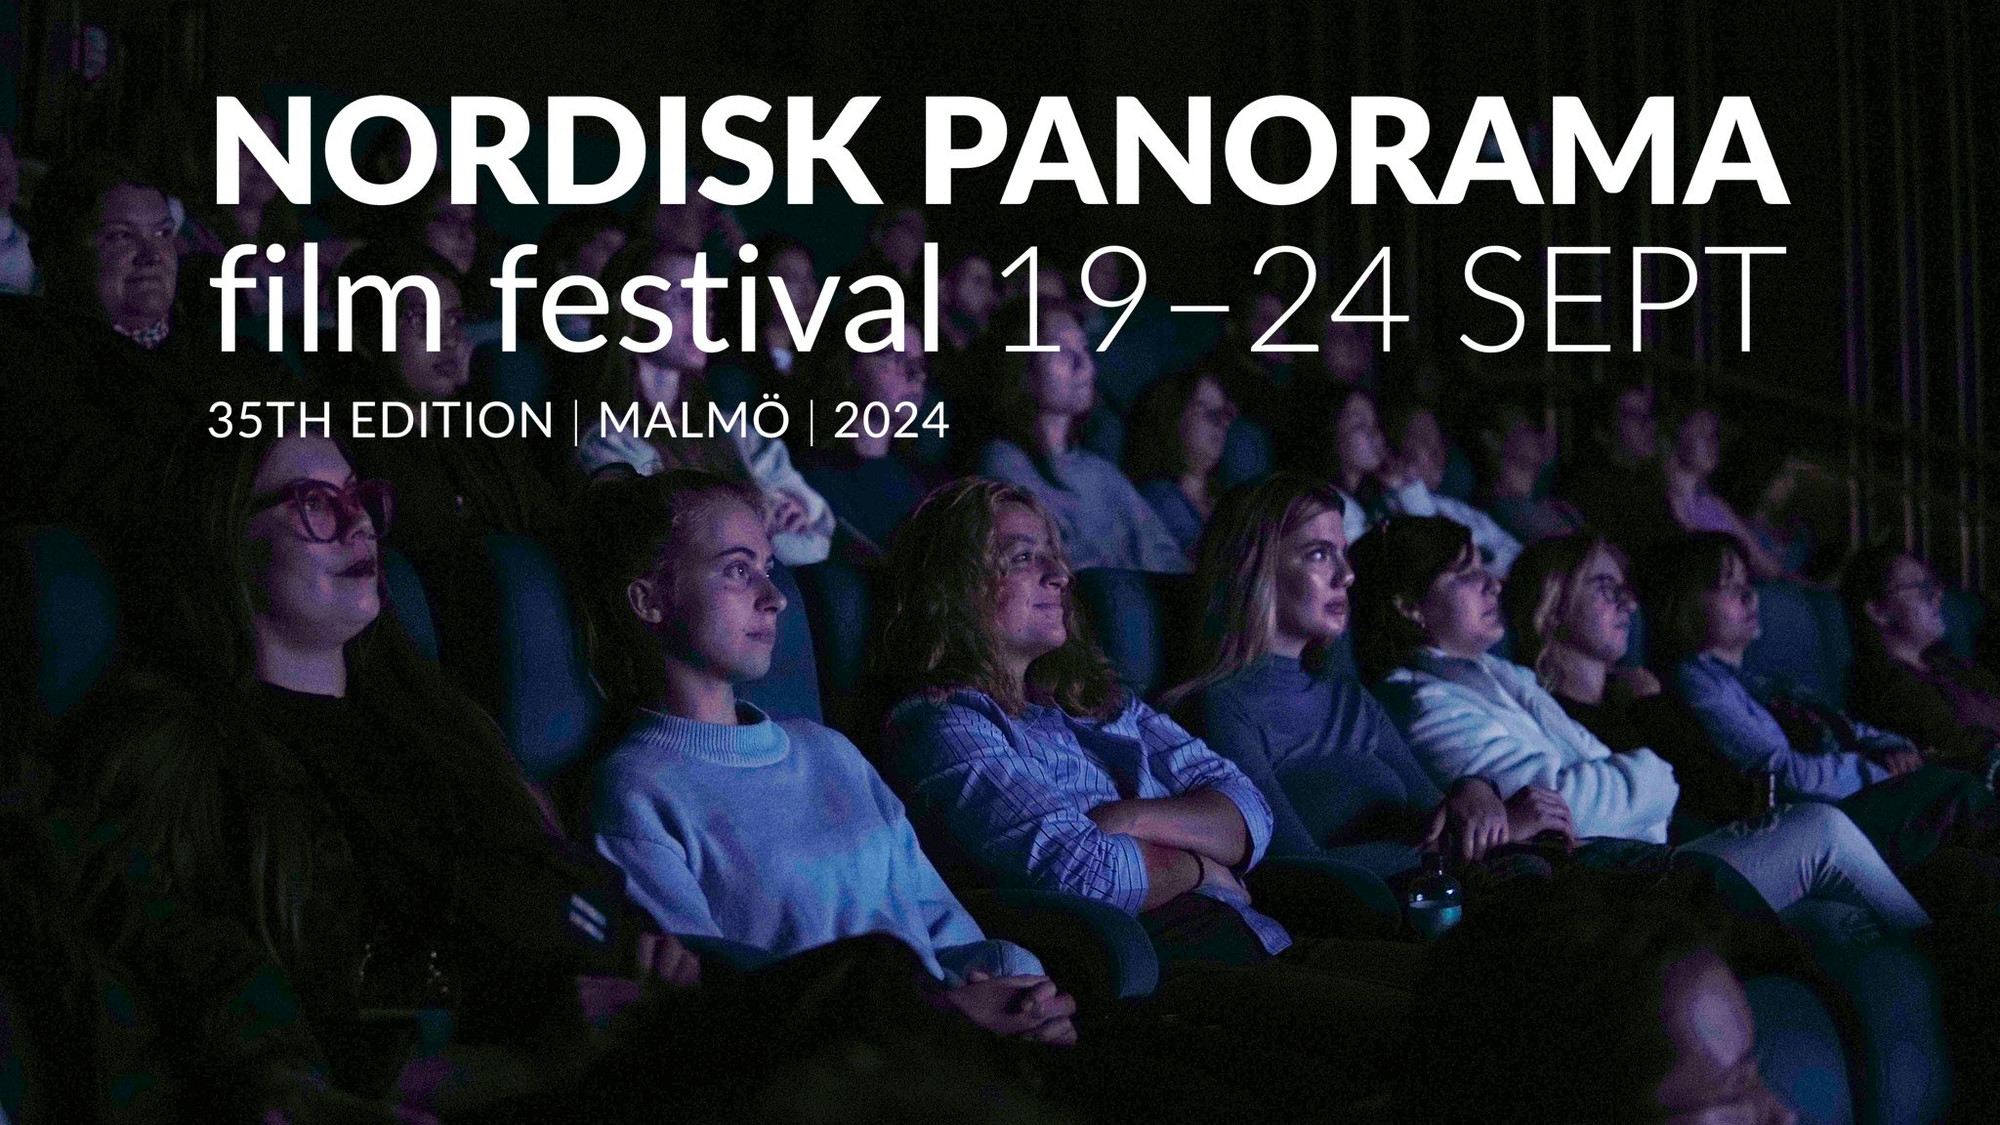 Nordisk Panorama film festival 19-24 sept. 35th edition. Malmö. 2024. Publikum i kinosal. Foto/illustrasjon.